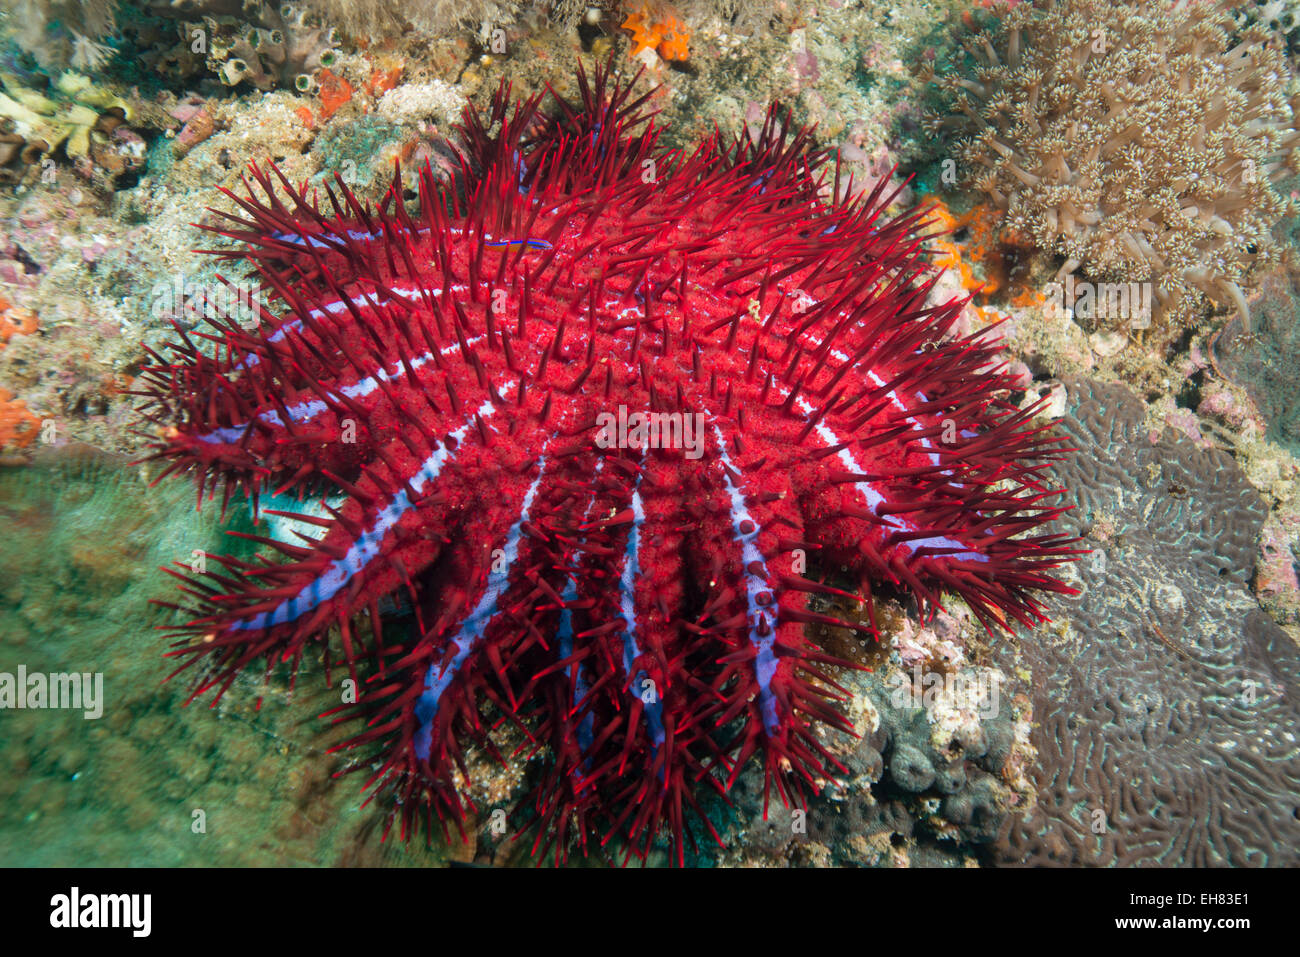 Crown of thorns starfish, Dimaniyat Islands, Gulf of Oman, Oman, Middle East Stock Photo